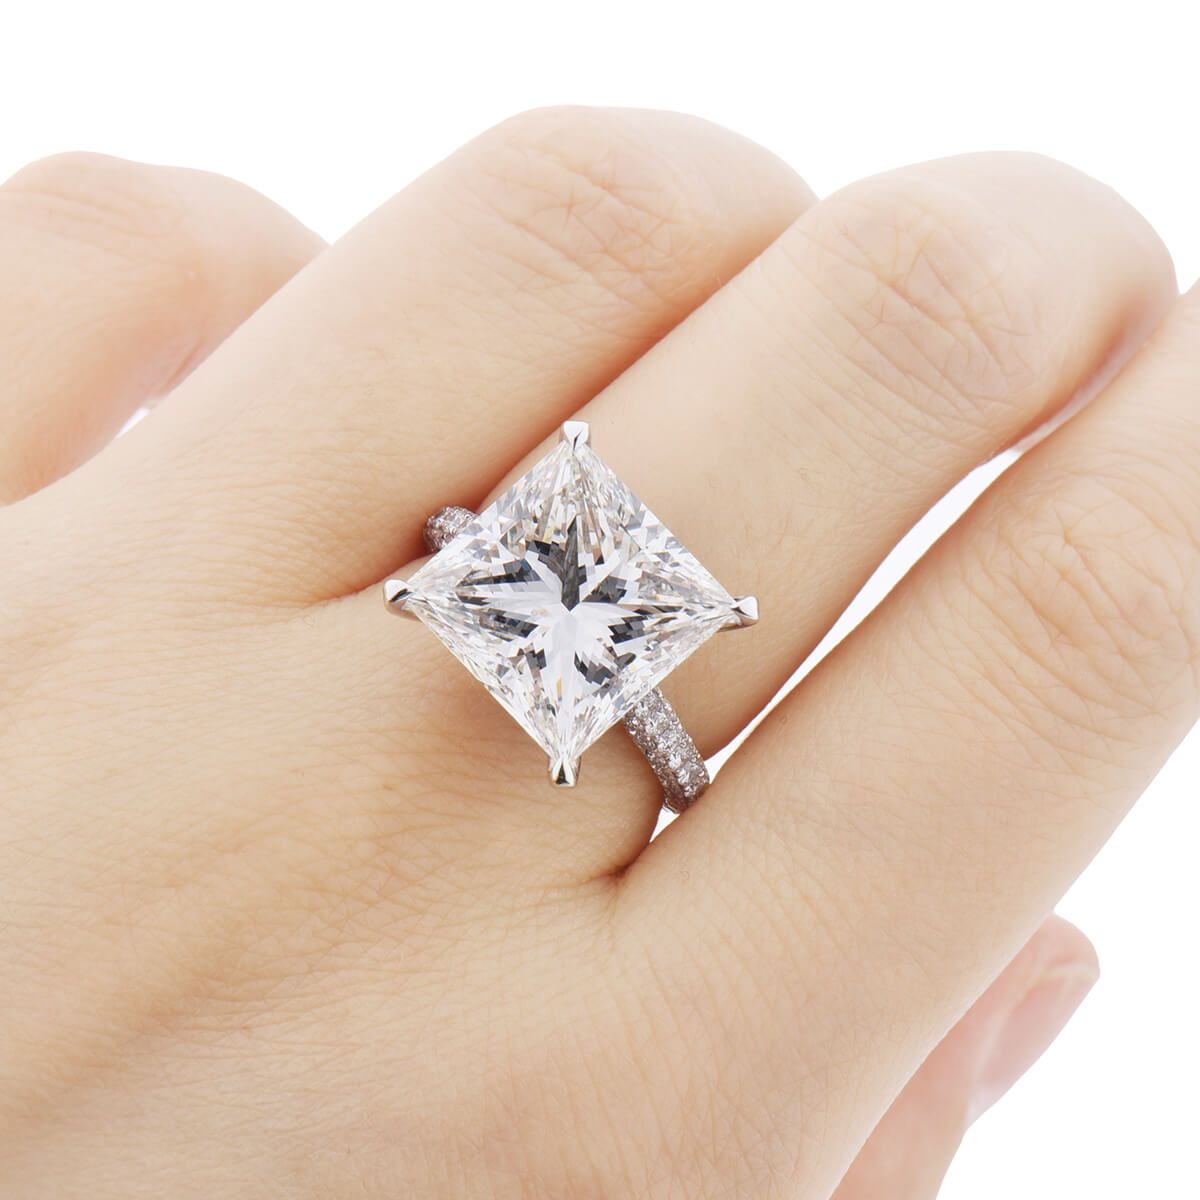  White Diamond Ring, 10.05 Ct. (11.09 Ct. TW), Princess shape, GIA Certified, 2183602408